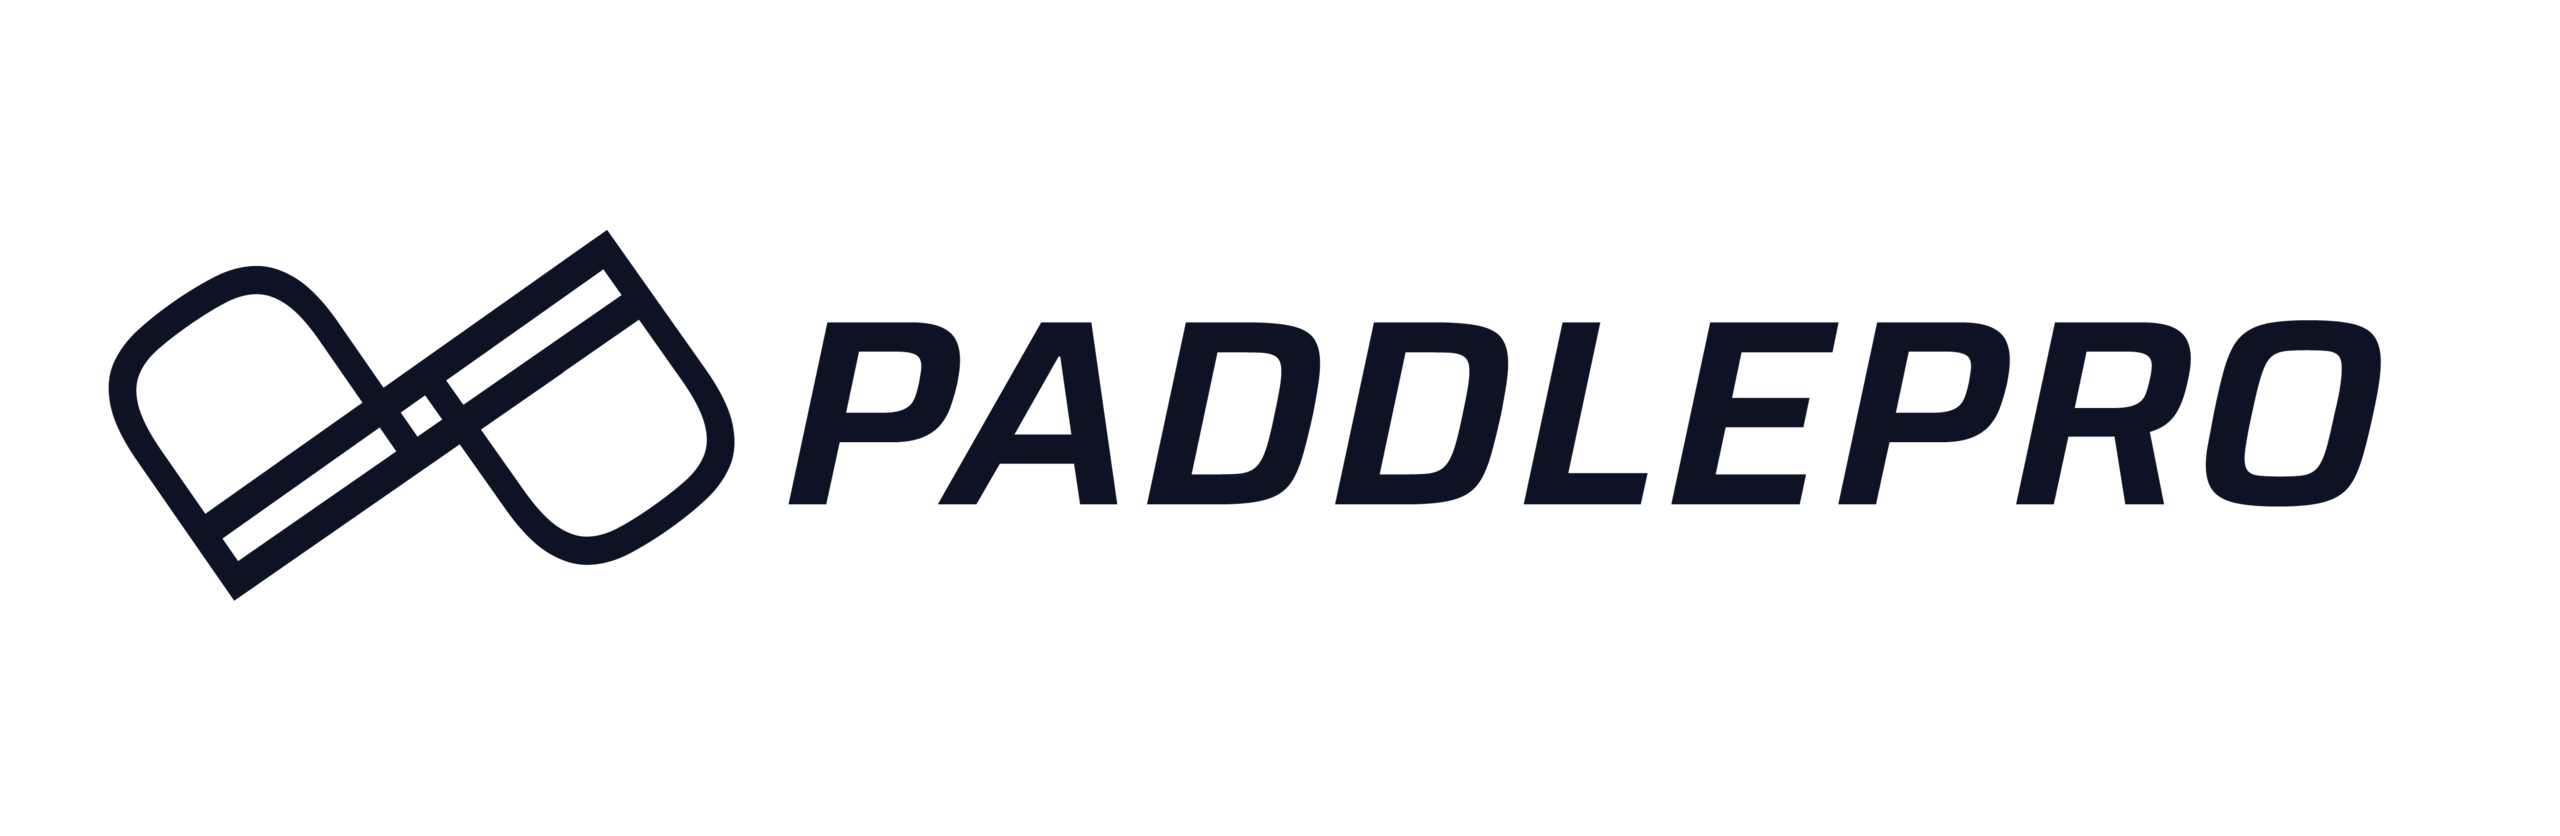 Paddle Pro Test Site